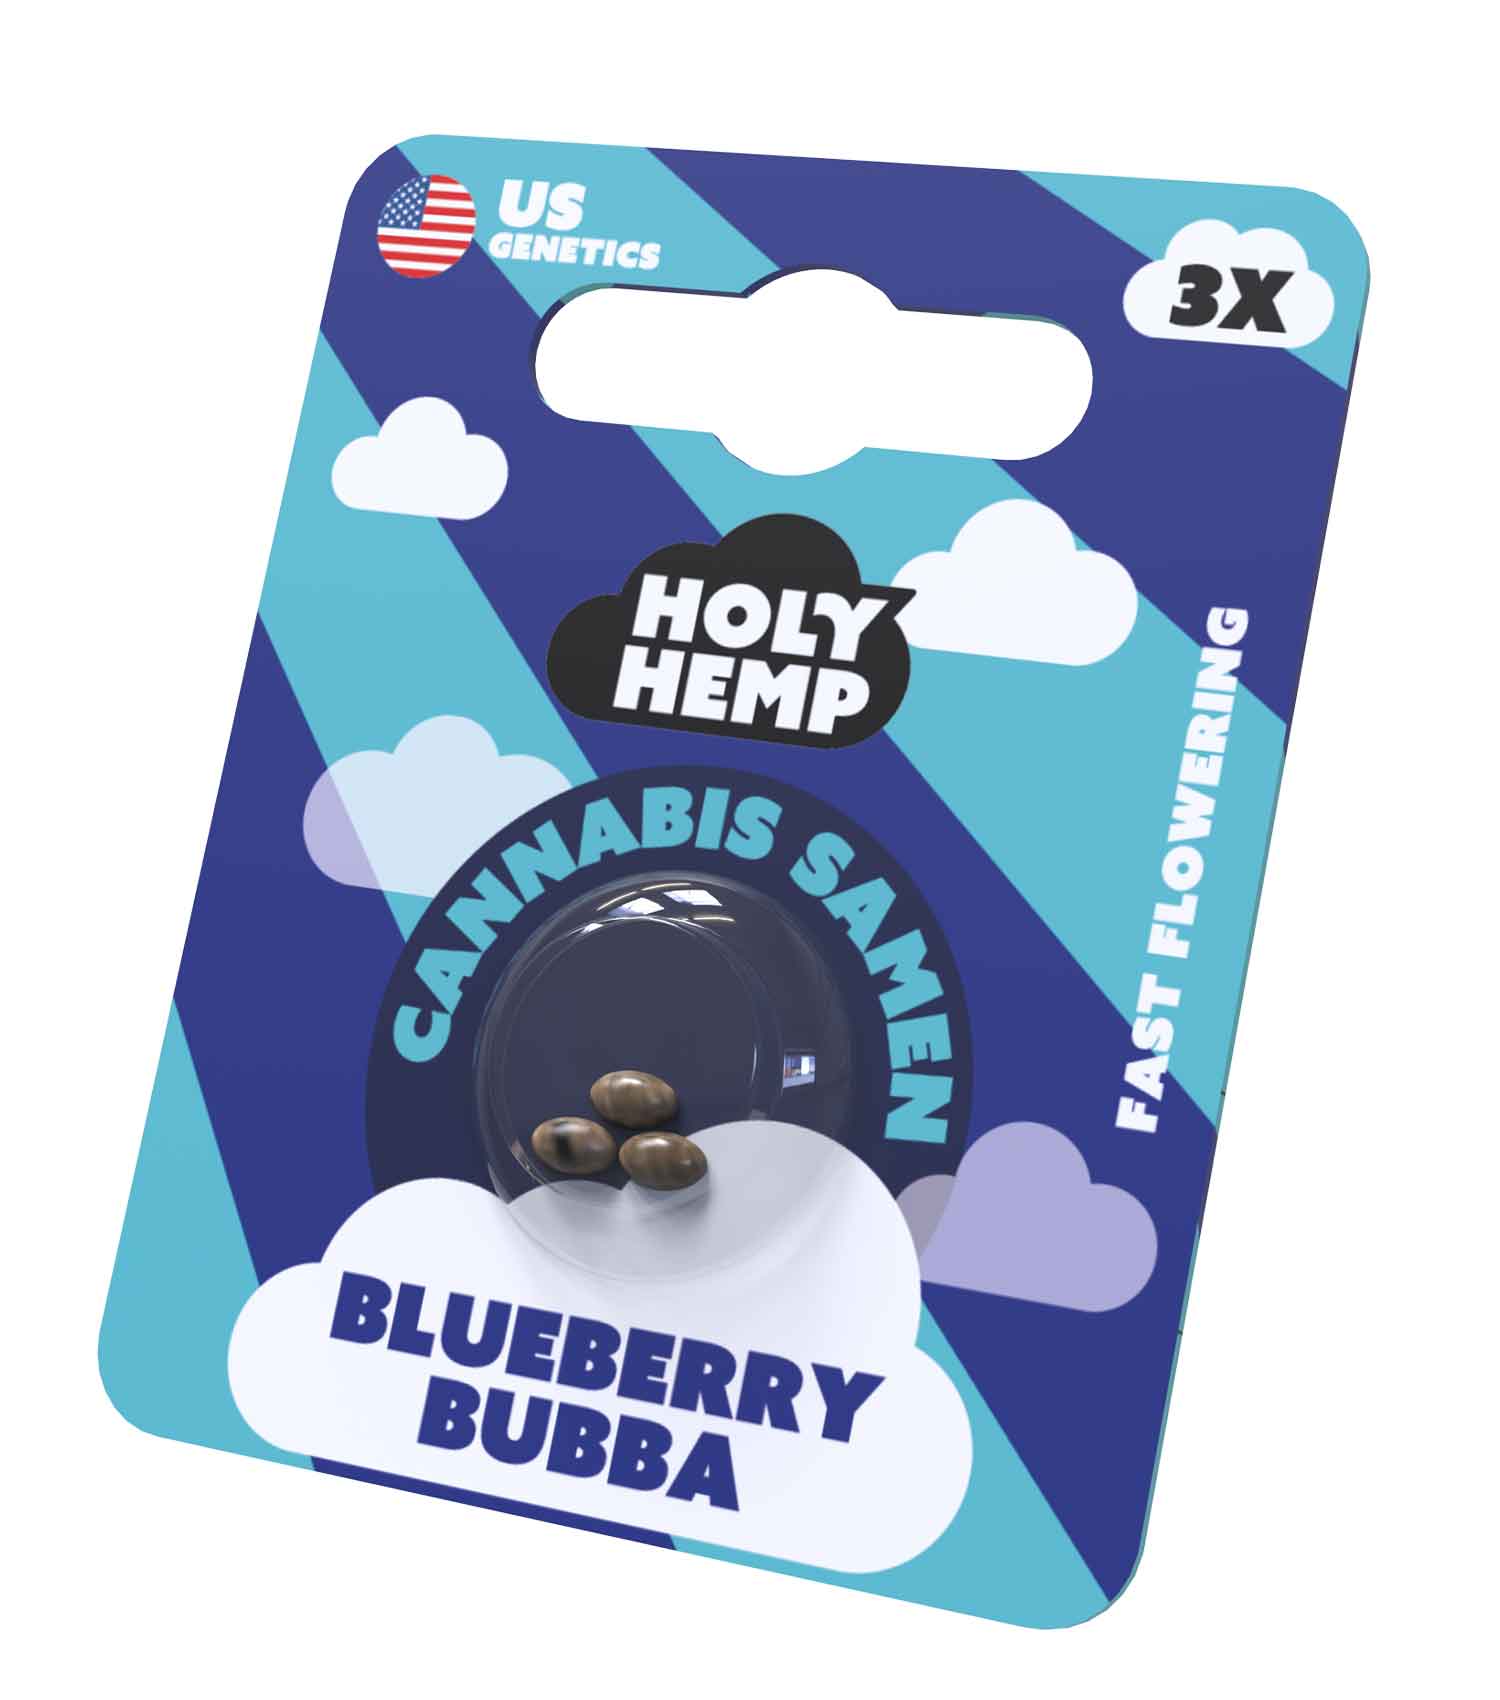 Blueberry Bubba Cannabissamen